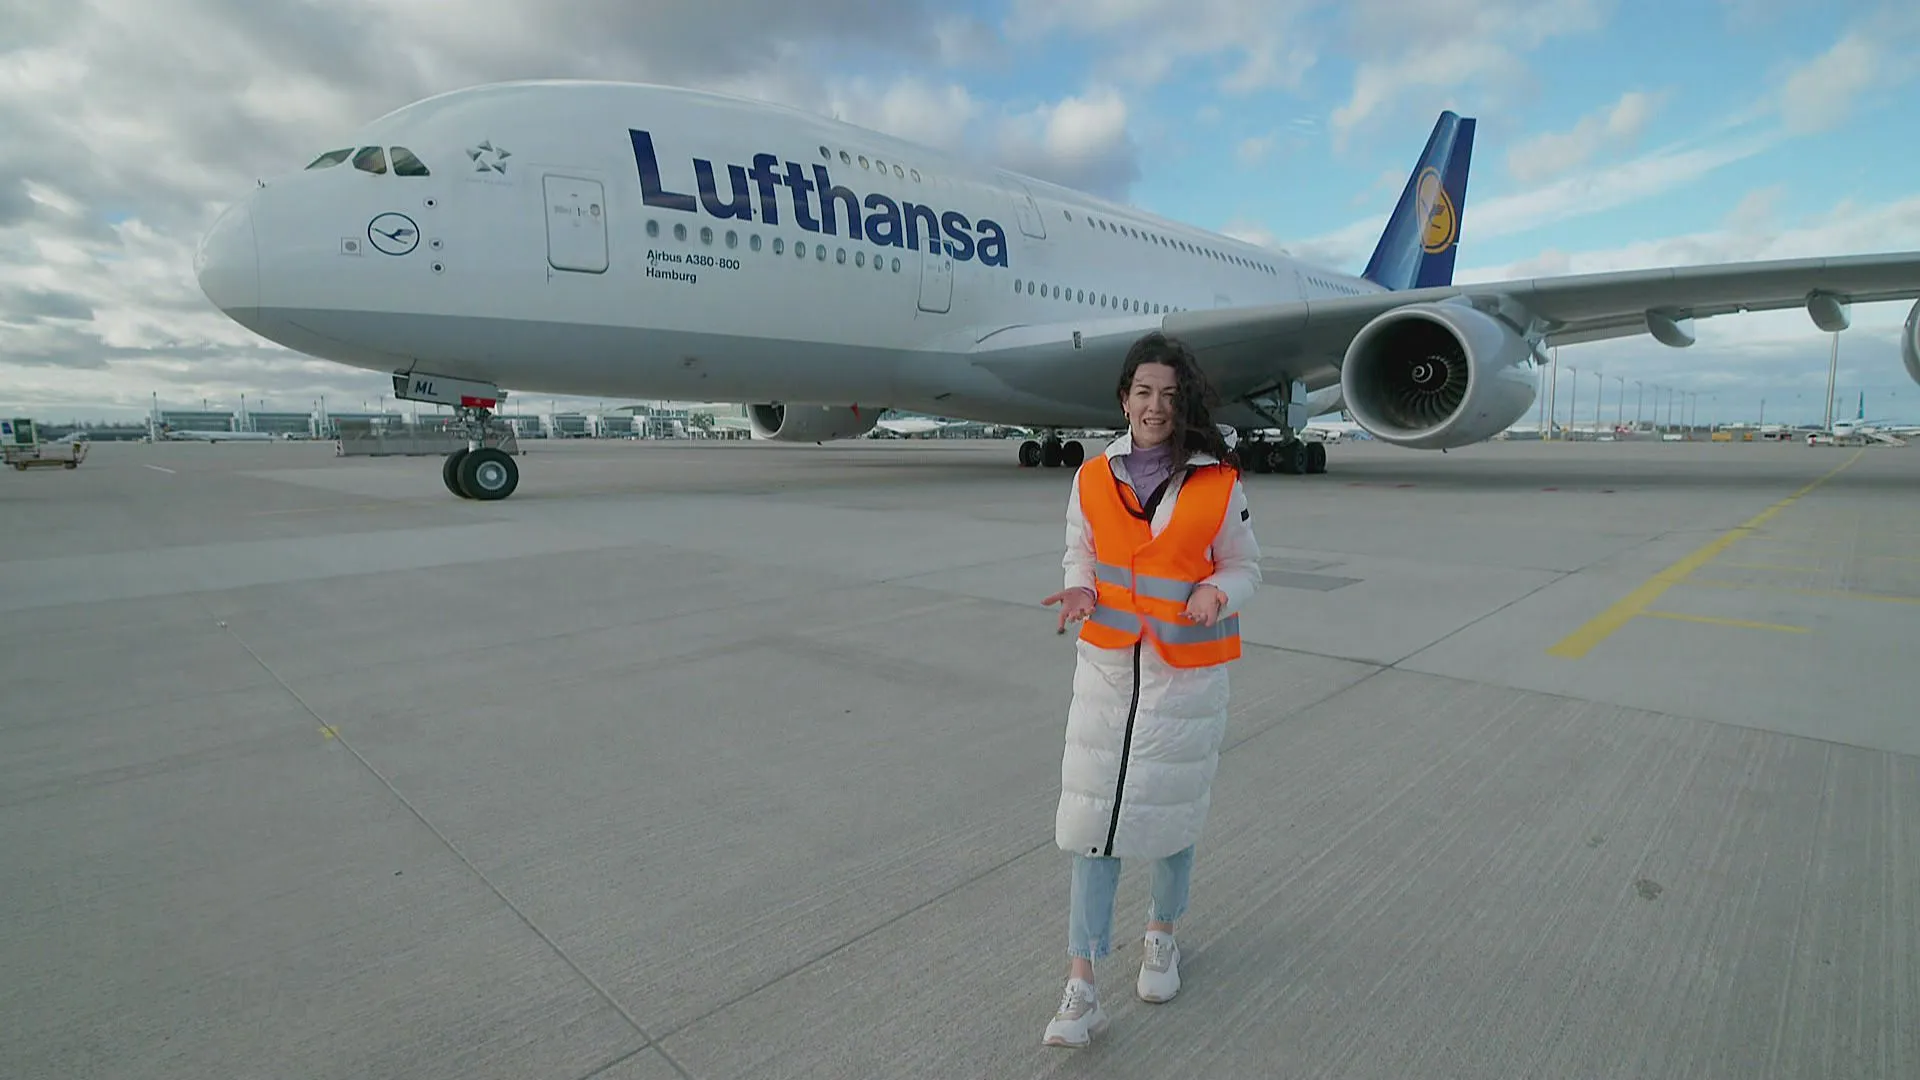 Deconstructed Lufthansa: high-flyer or still room for improvement?